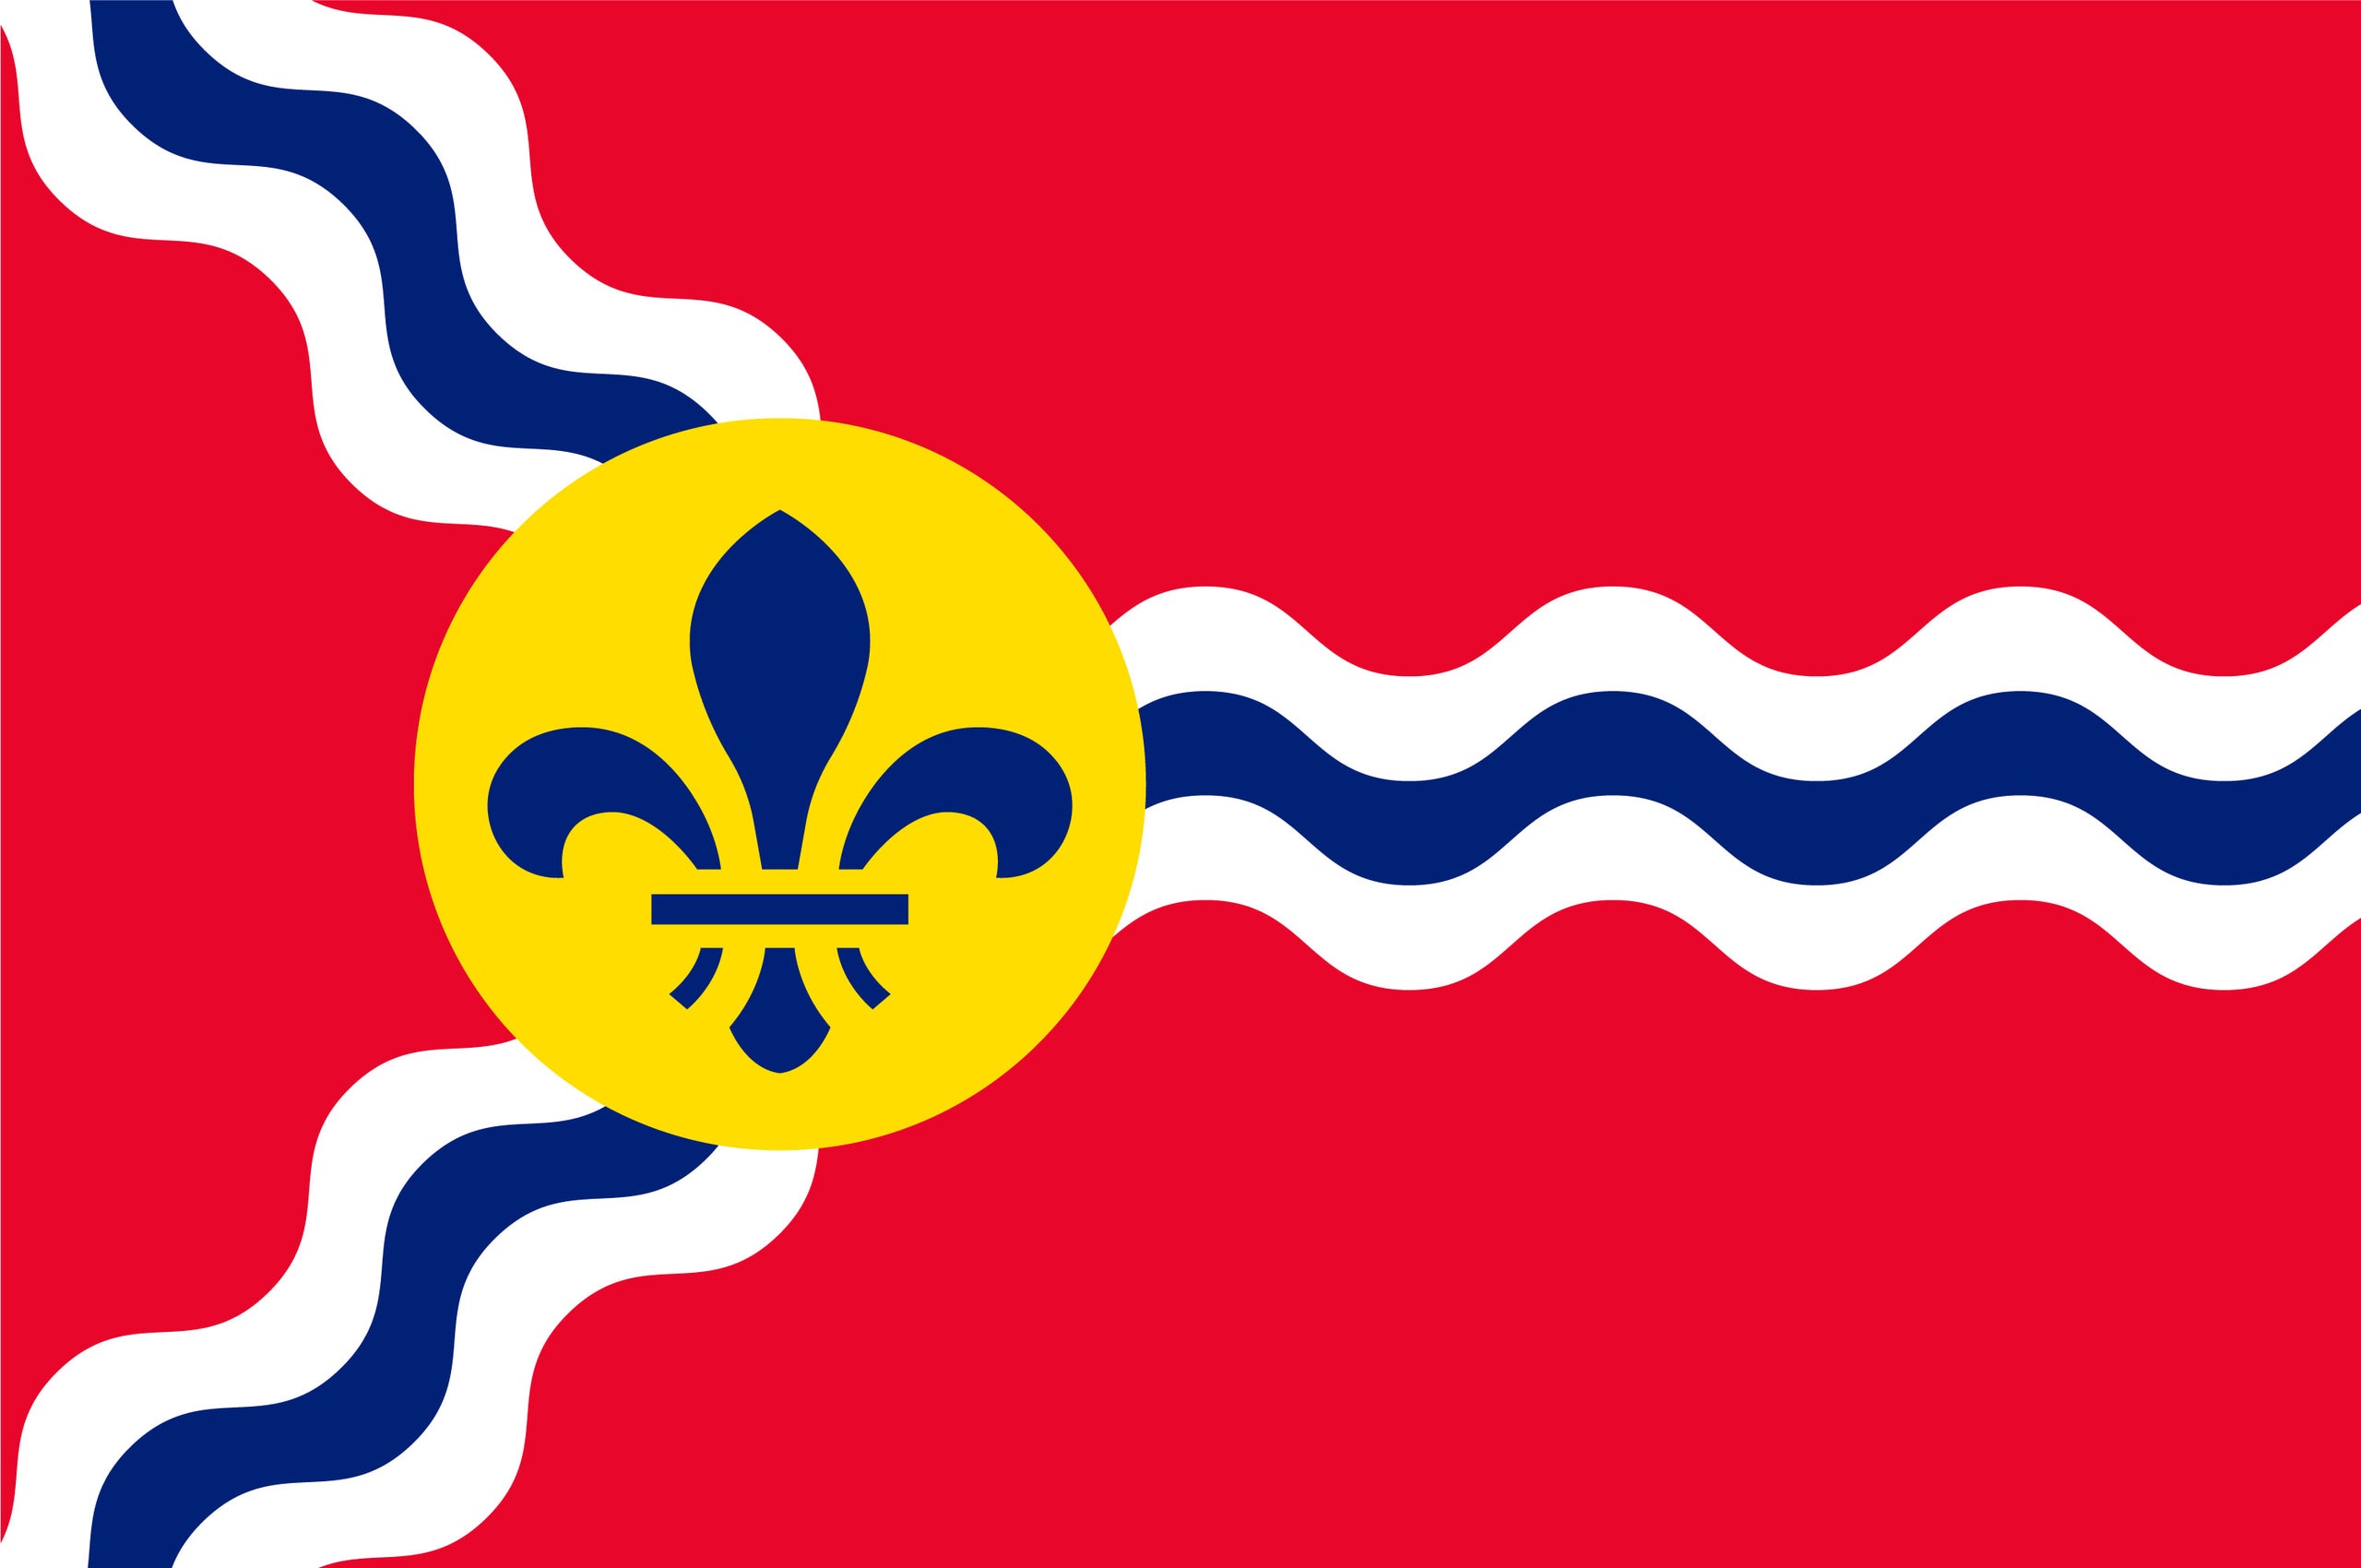 St Louis City SC | Garden Flag